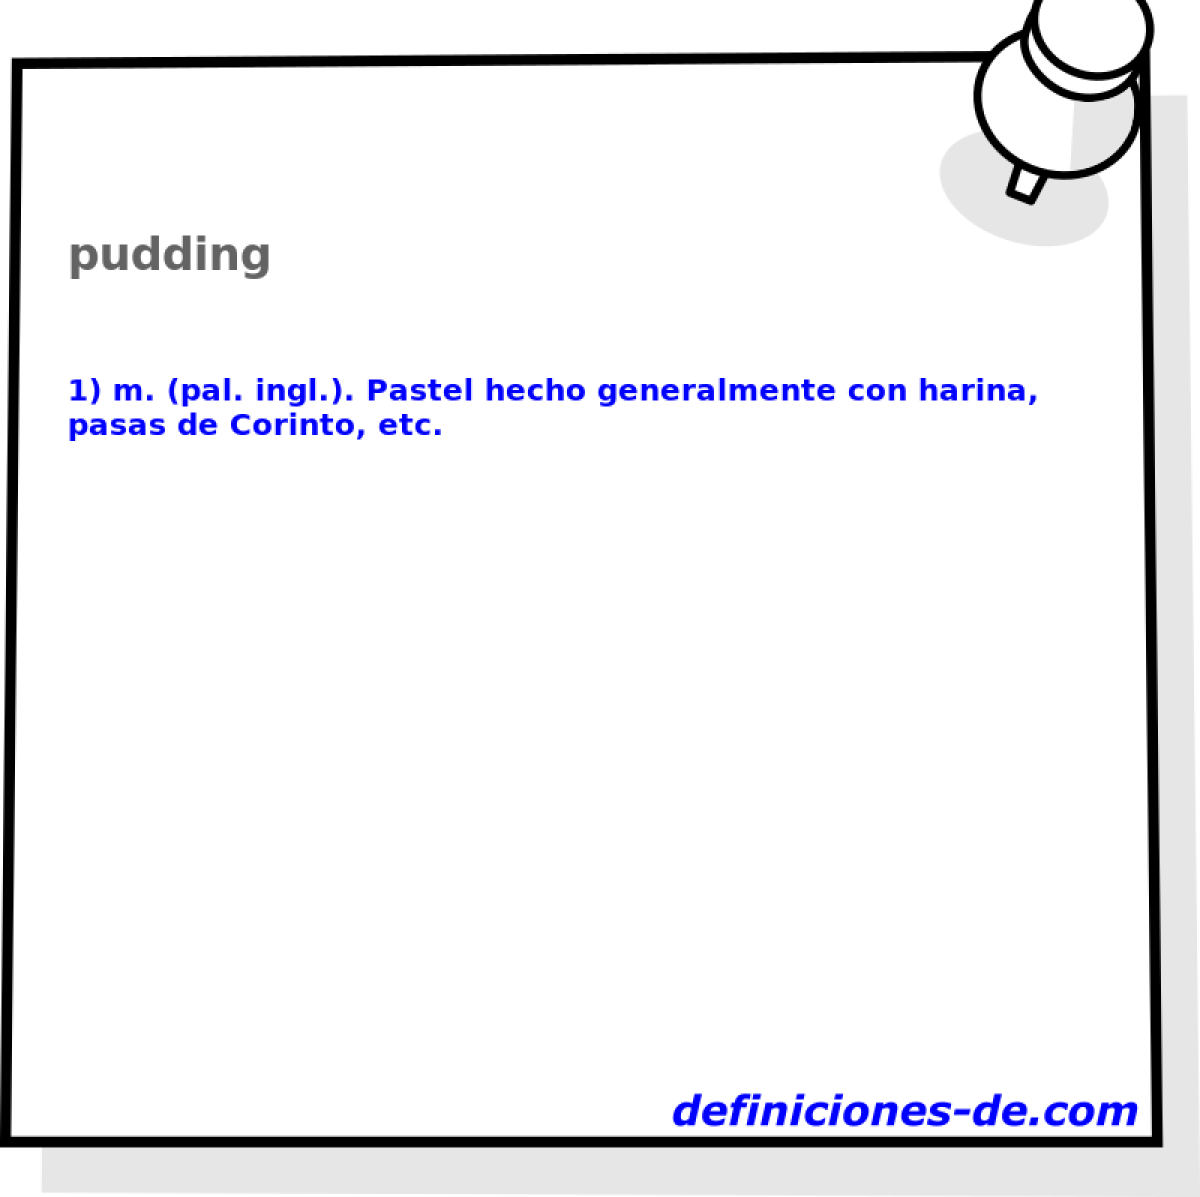 pudding 